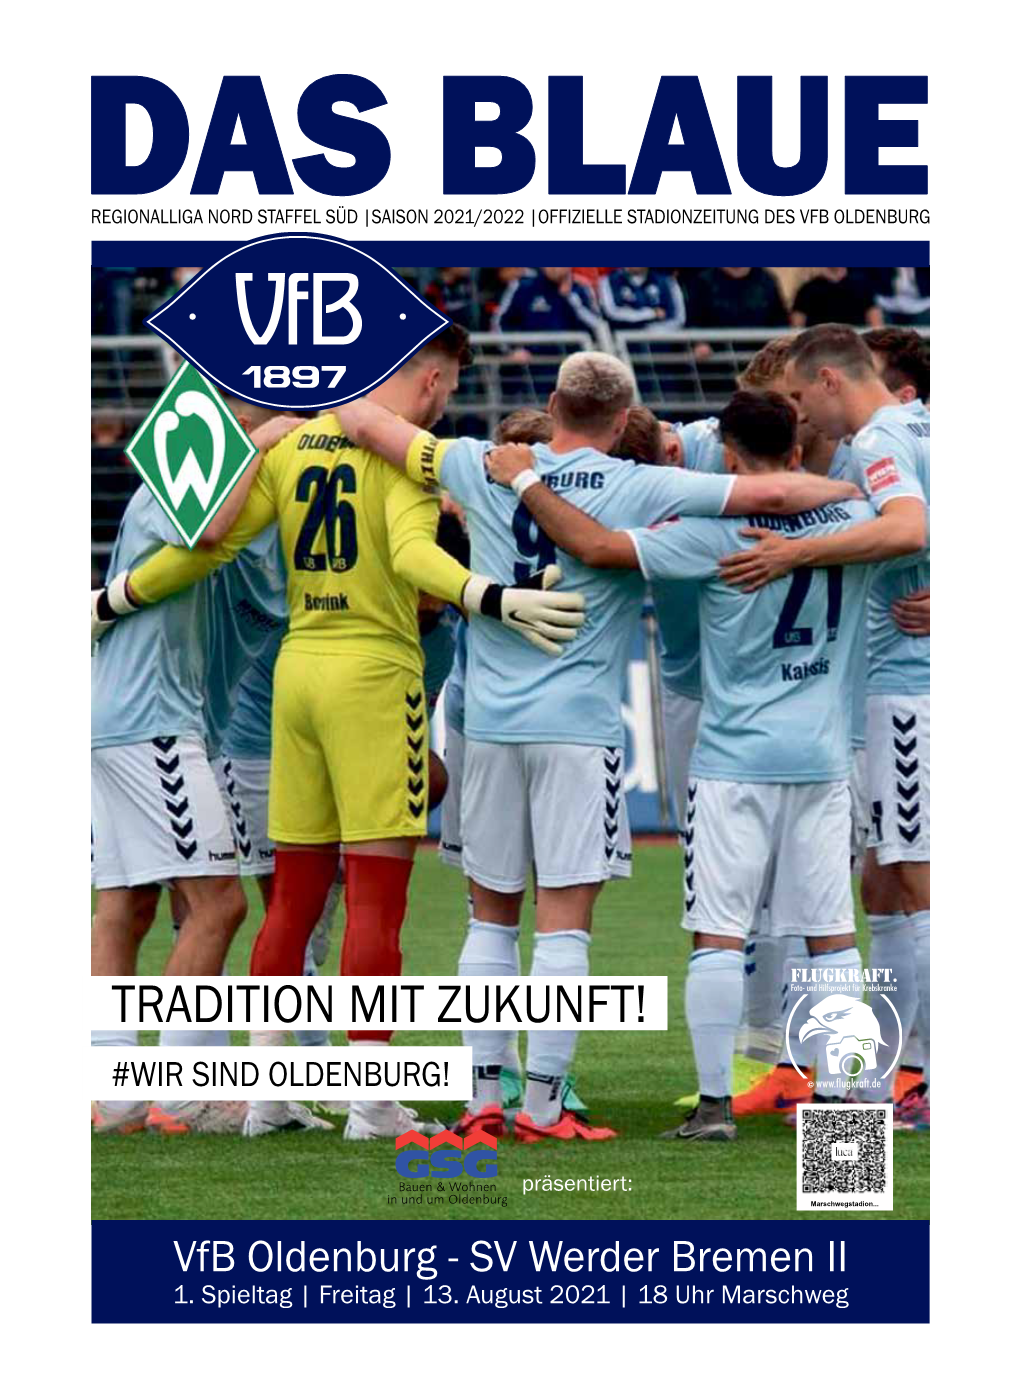 Vfb Oldenburg Vs. SV Werder Bremen II